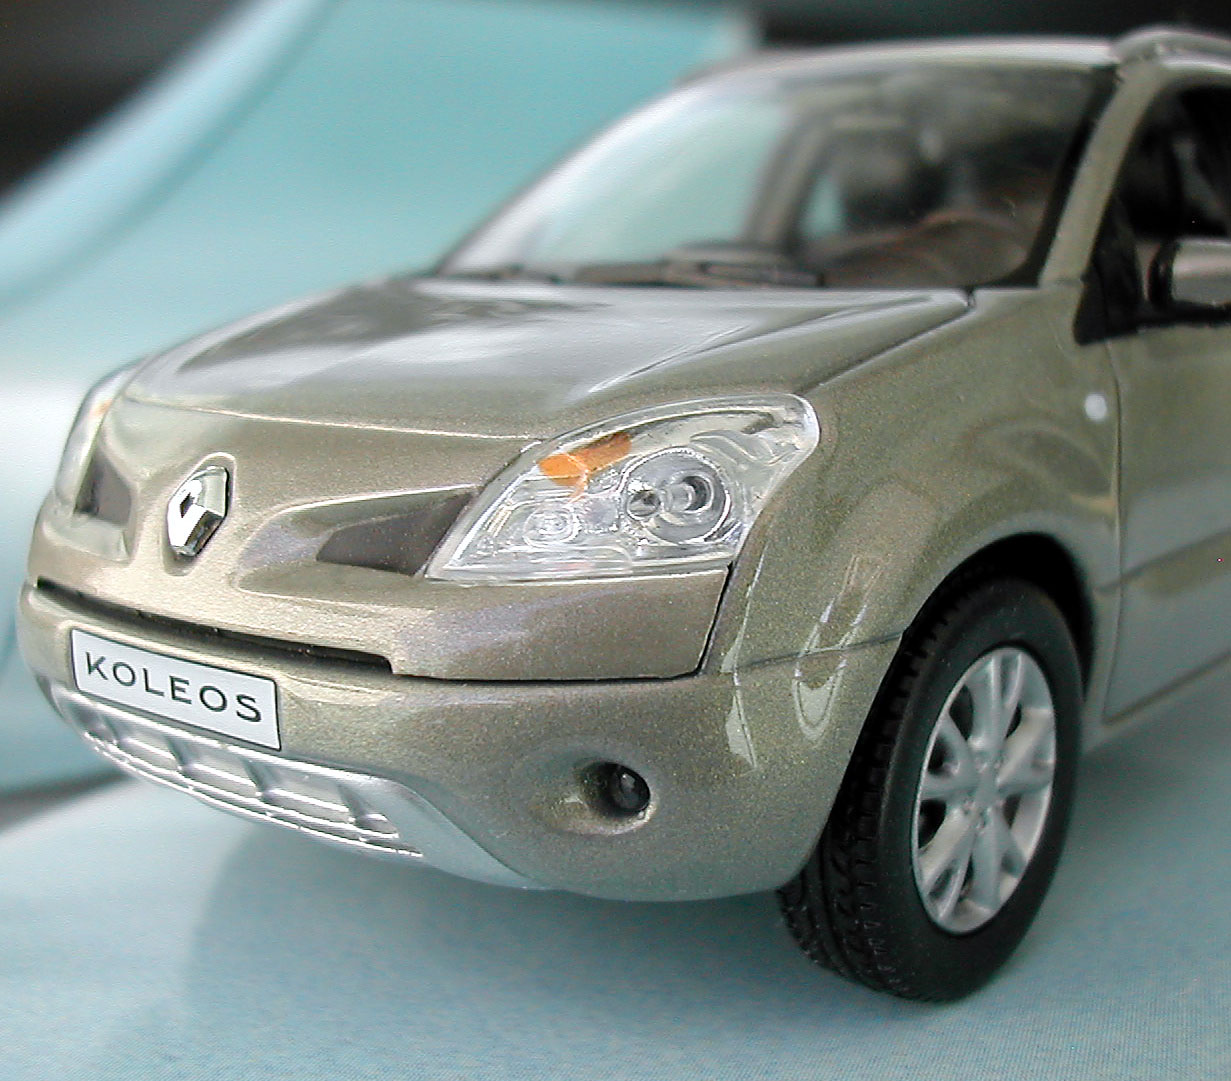 Renault Koleos